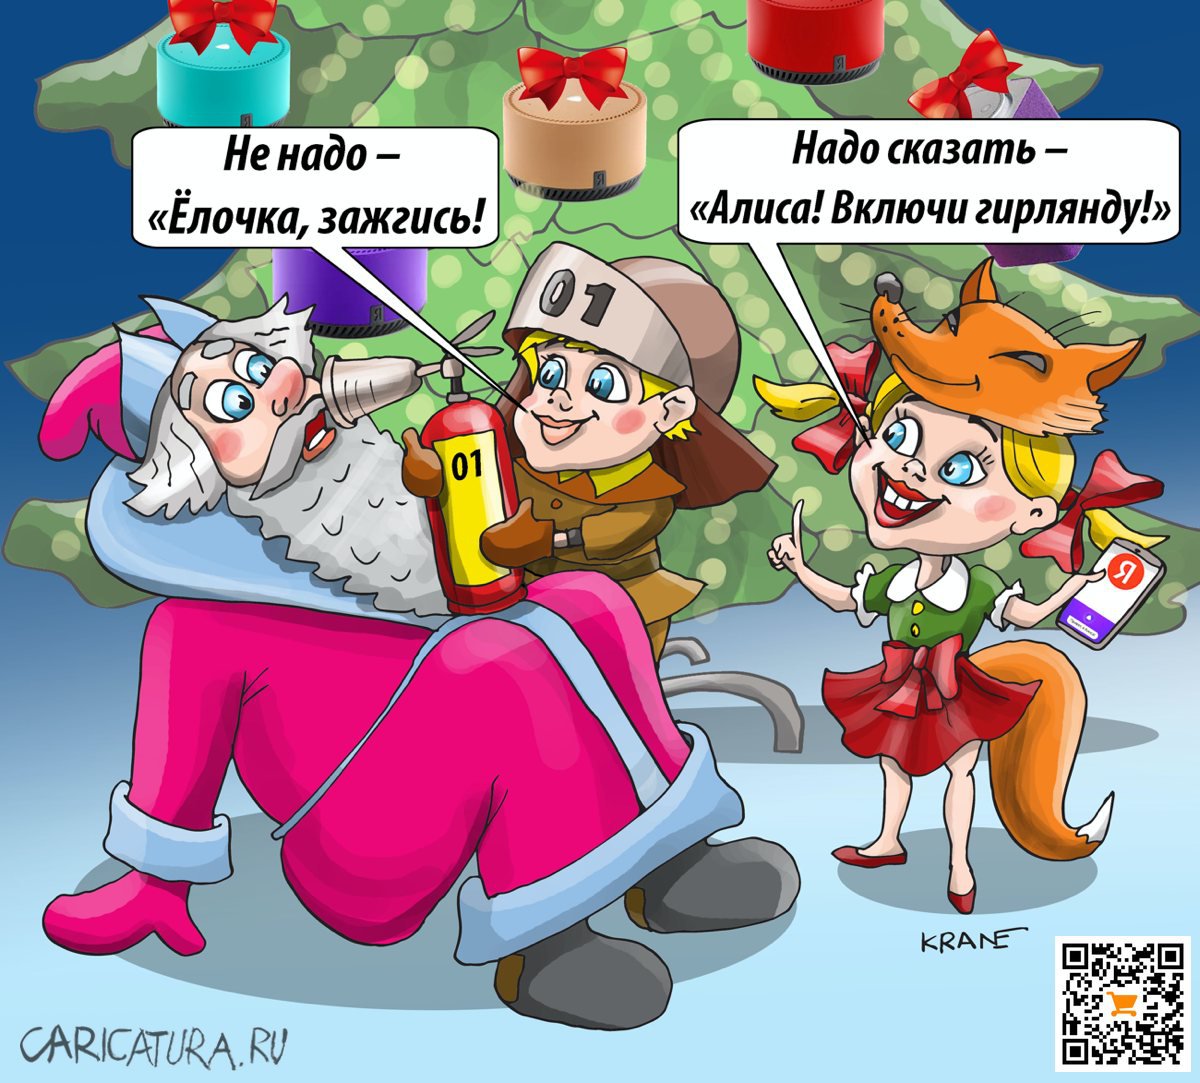 Карикатура "Умная новогодняя ёлка", Евгений Кран